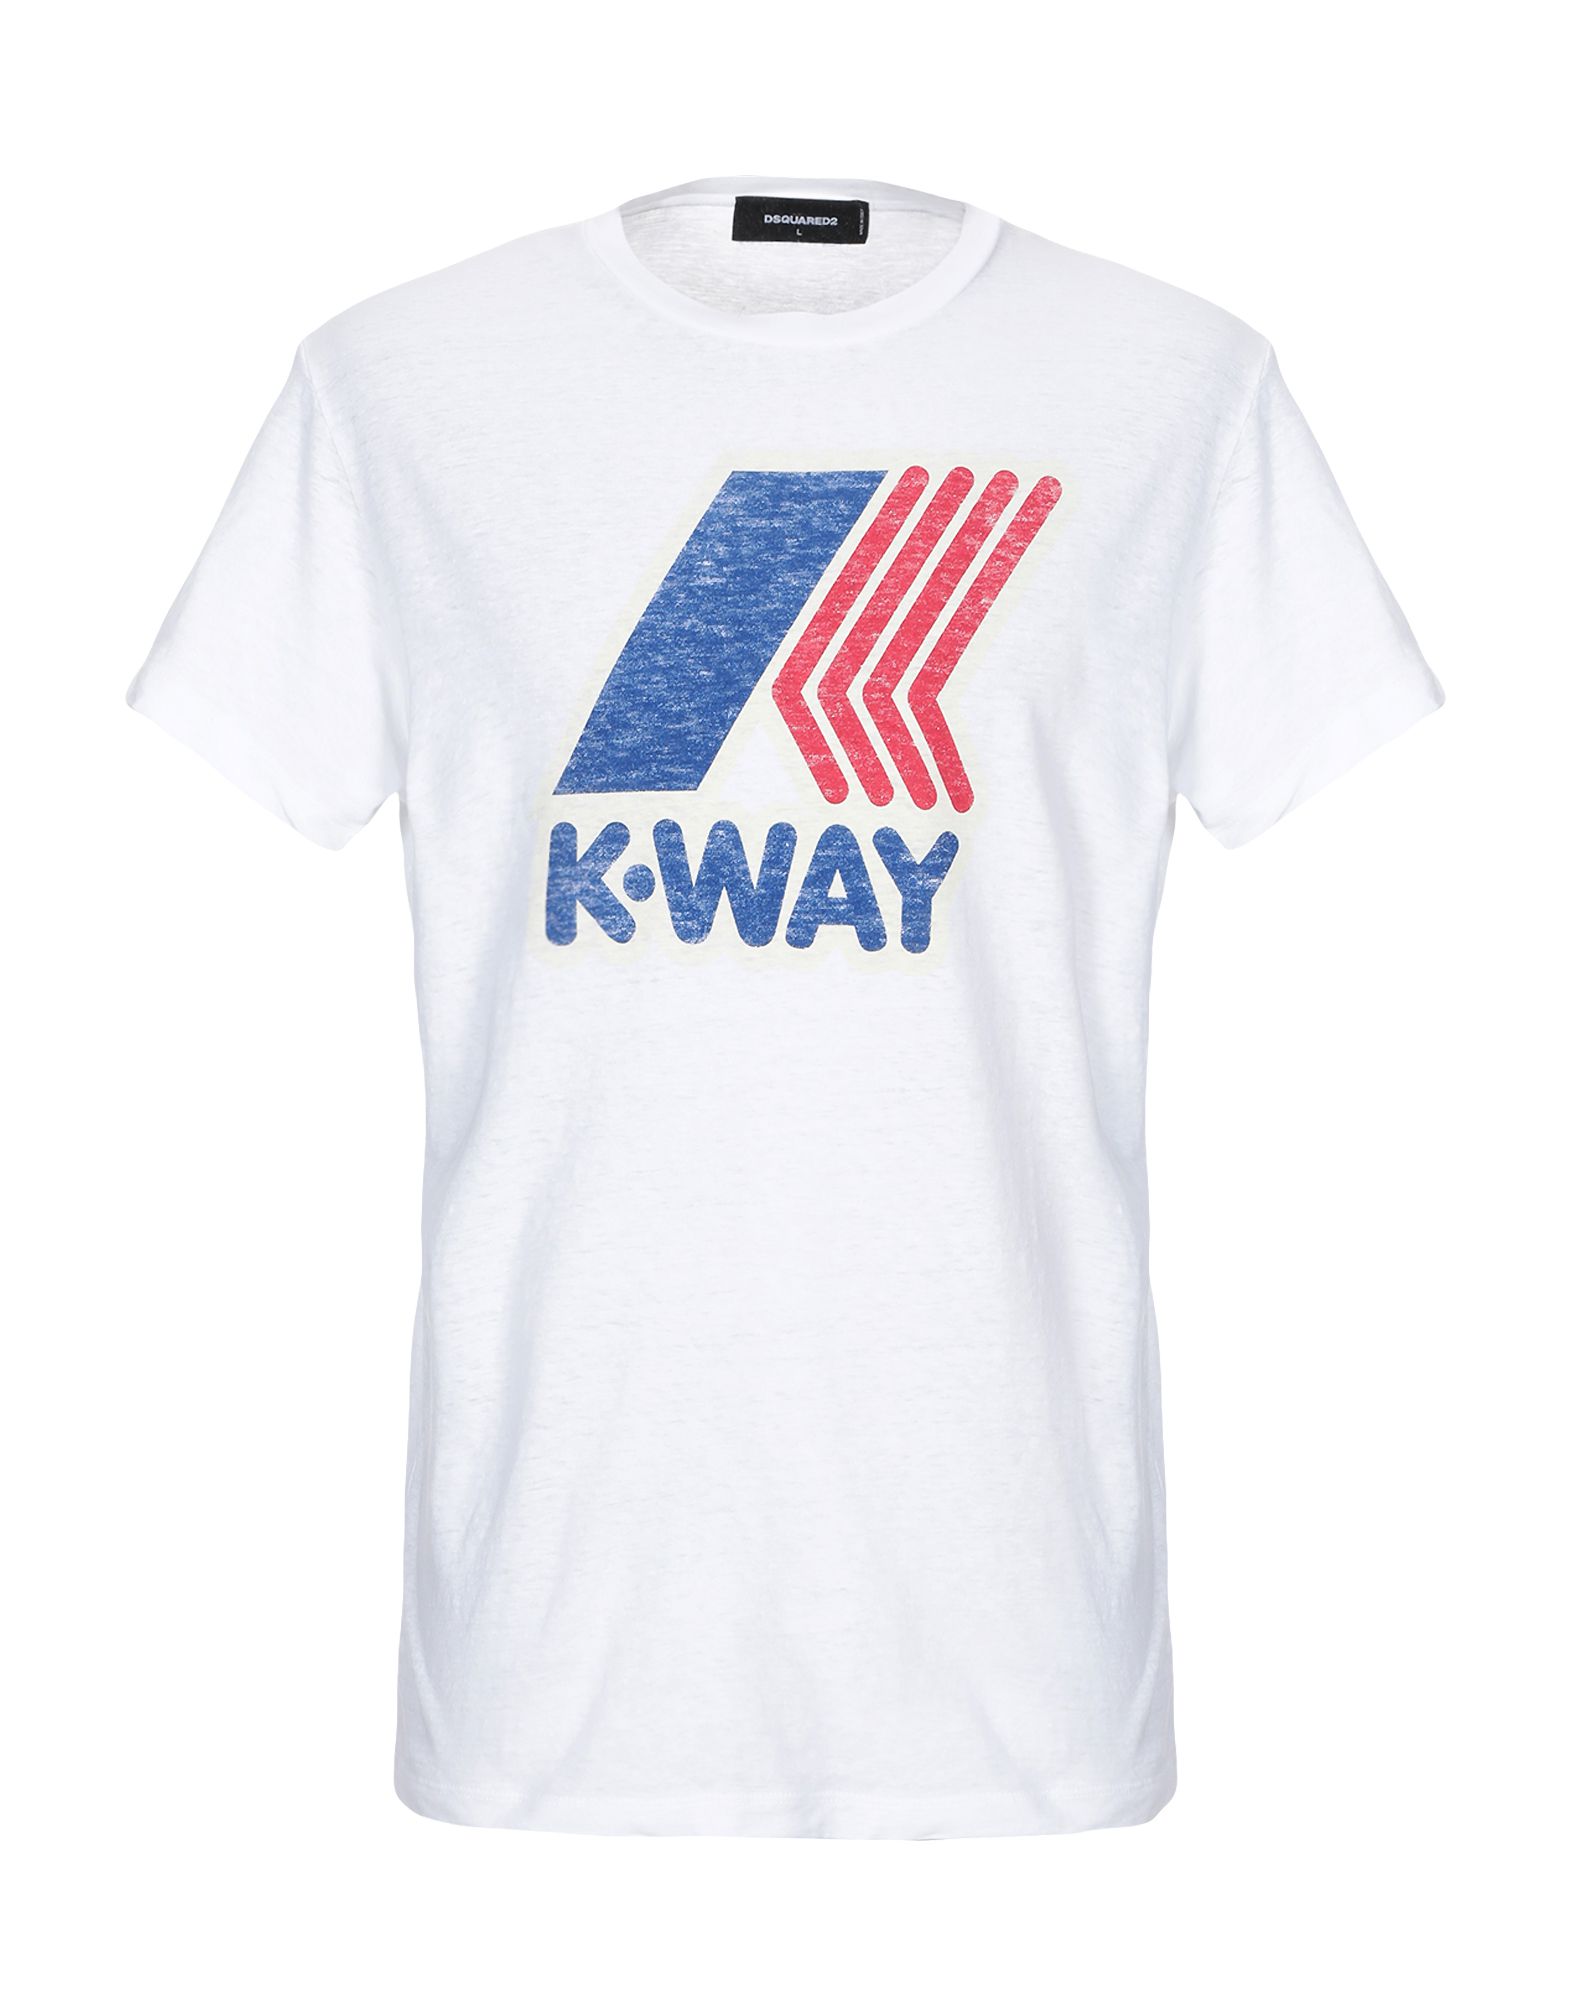 DSQUARED2 x K-WAY T-shirts